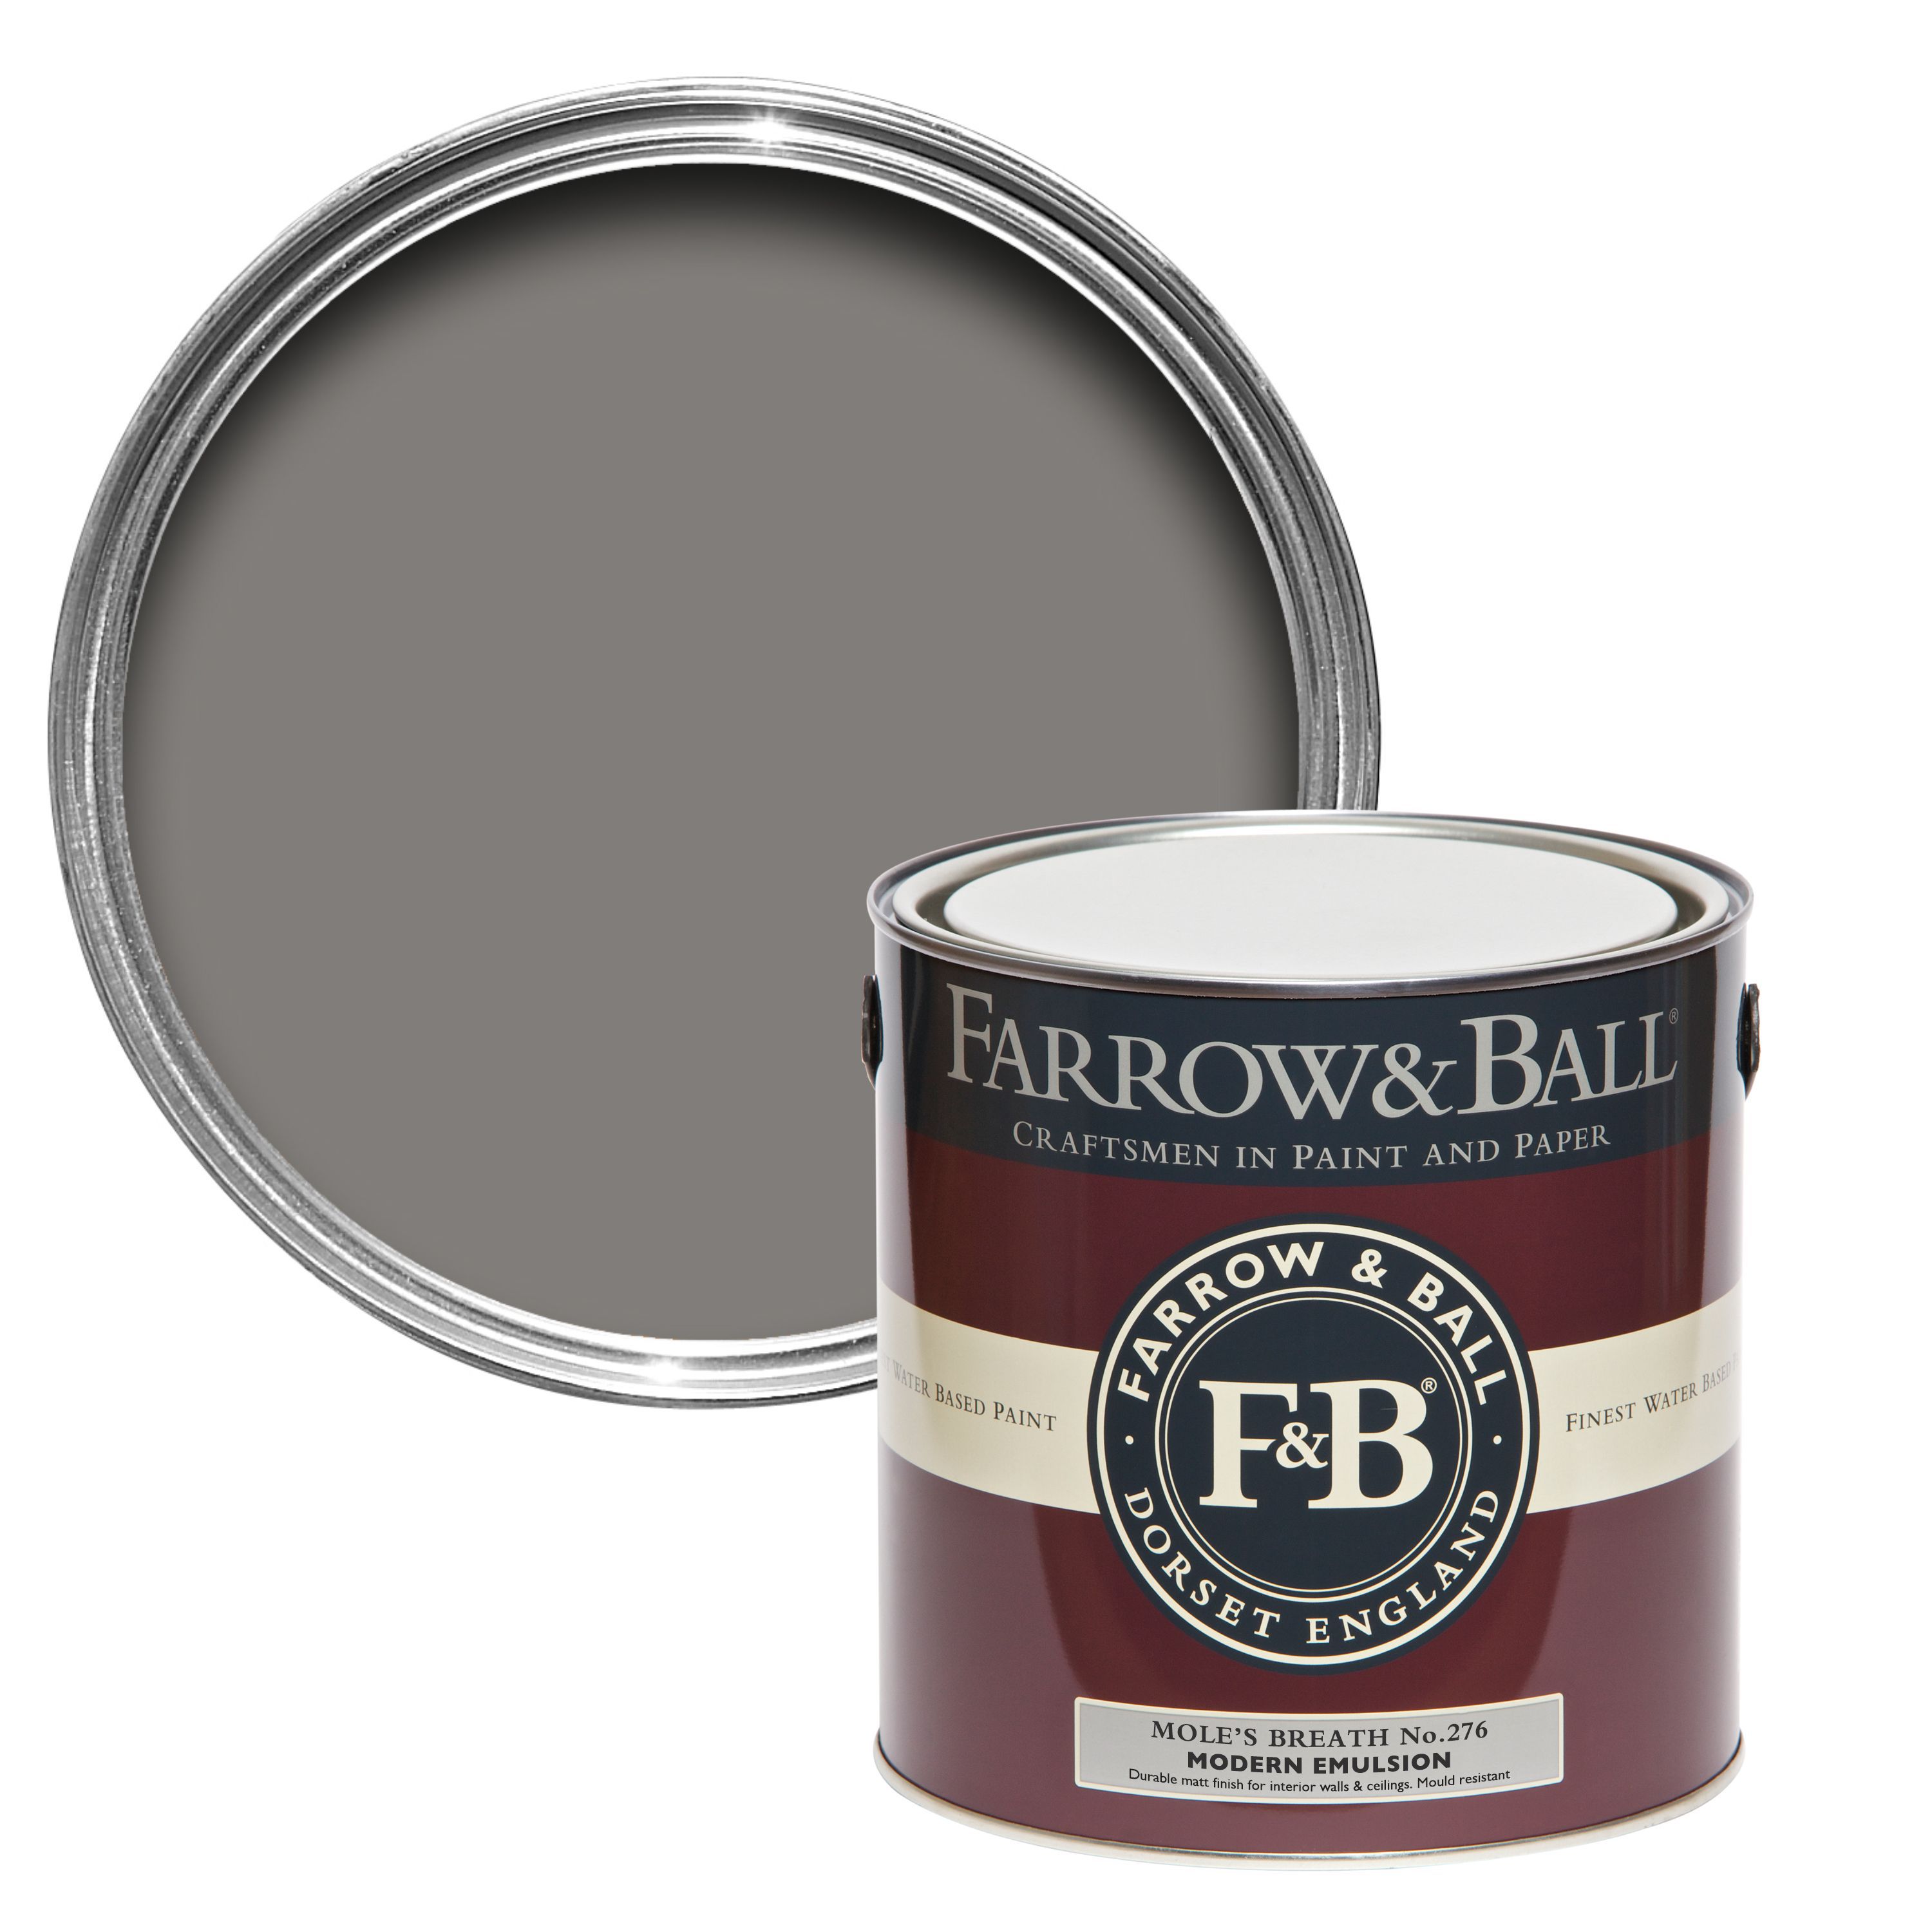 Farrow & Ball Modern Mole's breath Matt Emulsion paint, 2.5L